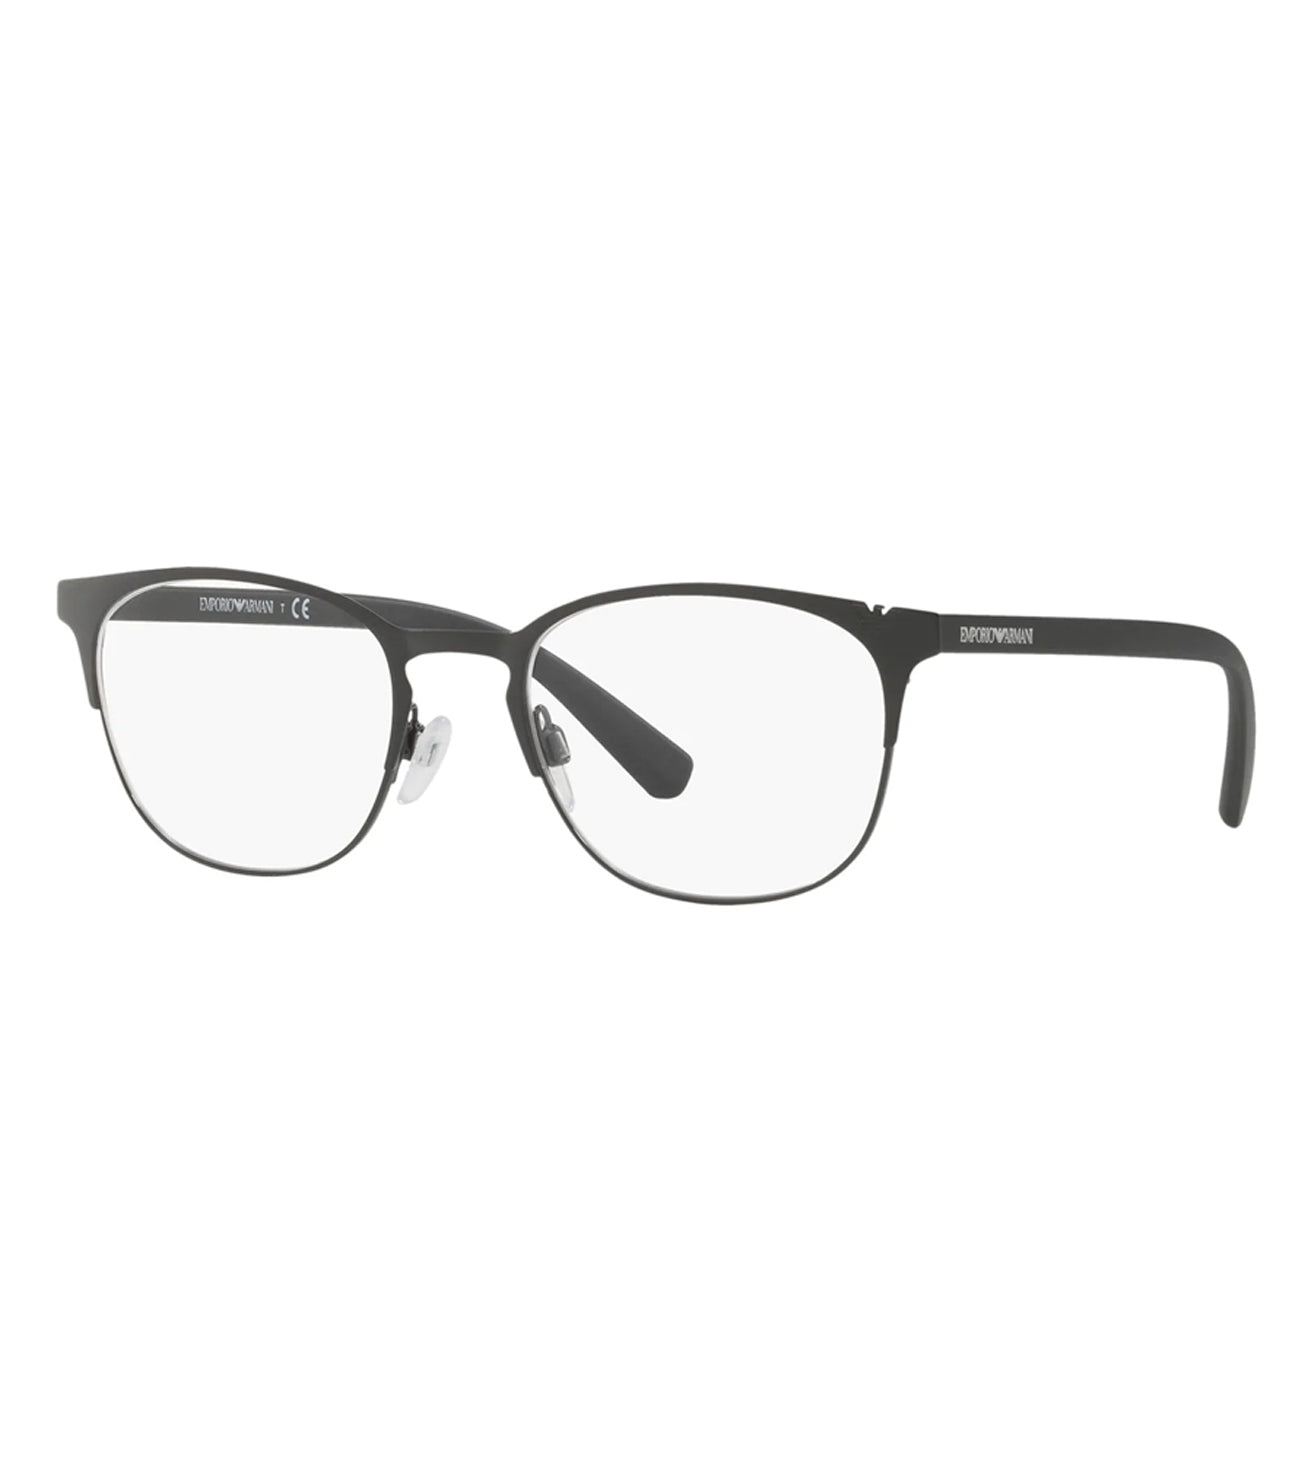 Oval Matte Black Eyeglasses